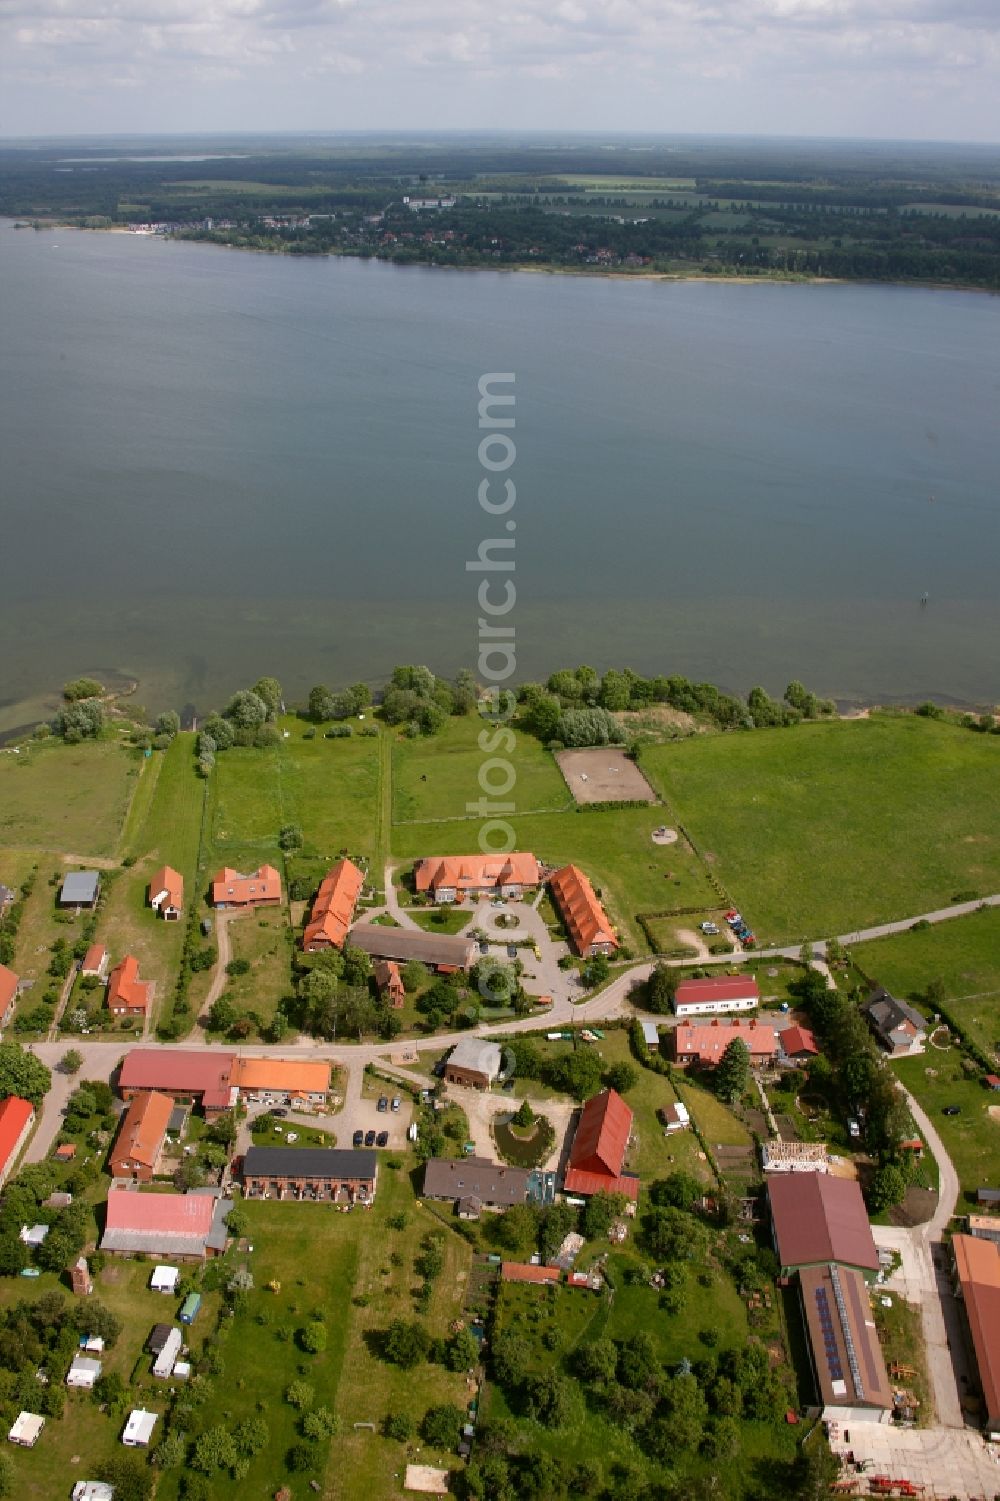 Aerial photograph Zielow - Village of Zielow on the shores of Lake Mueritz in Mecklenburg - West Pomerania